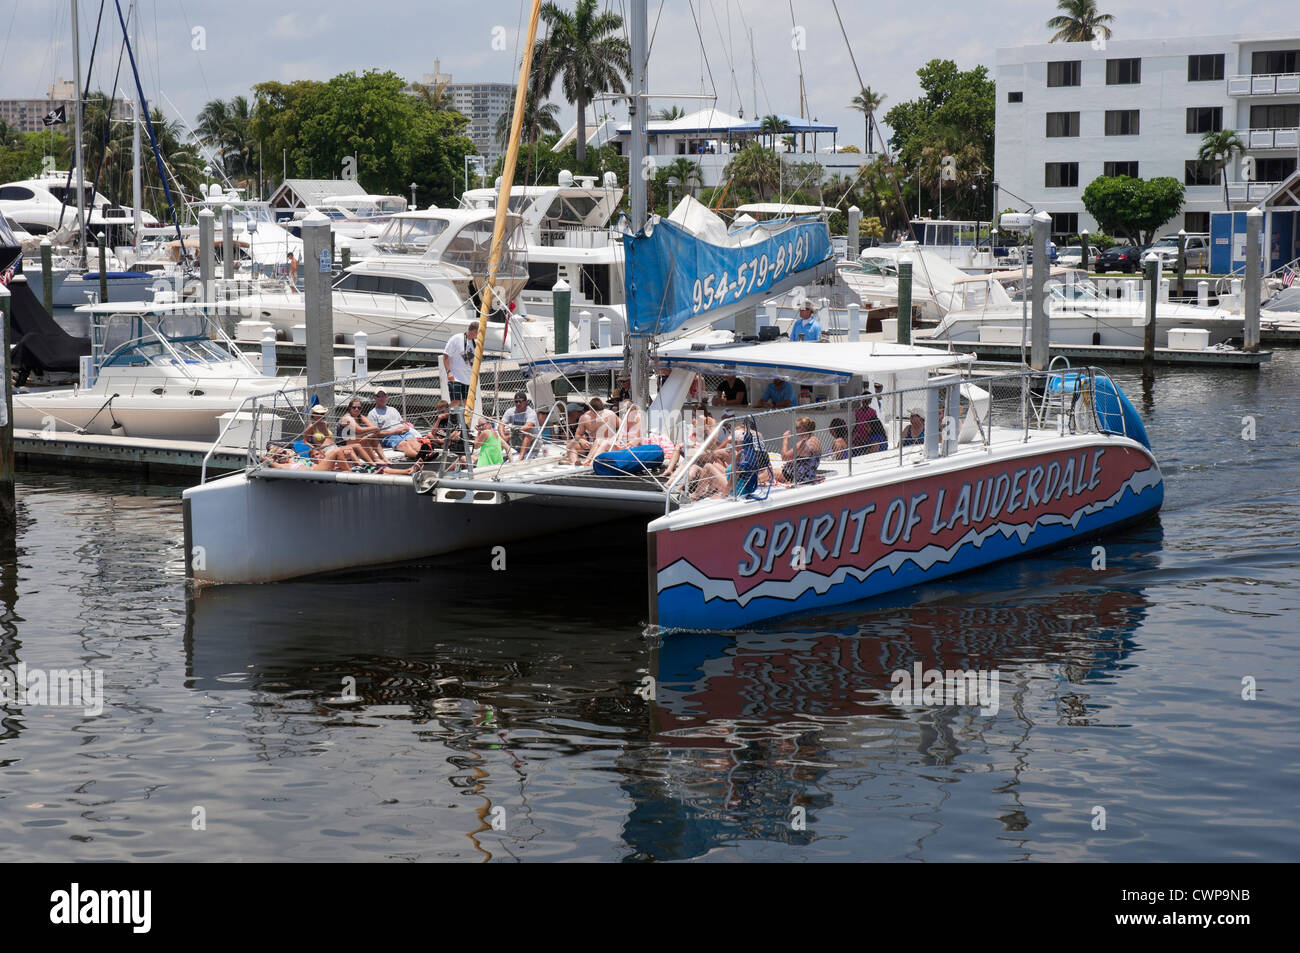 Sightseeing cruise leaves Bahia Mar Resort and Marina, Ft. Lauderdale, Florida. Stock Photo